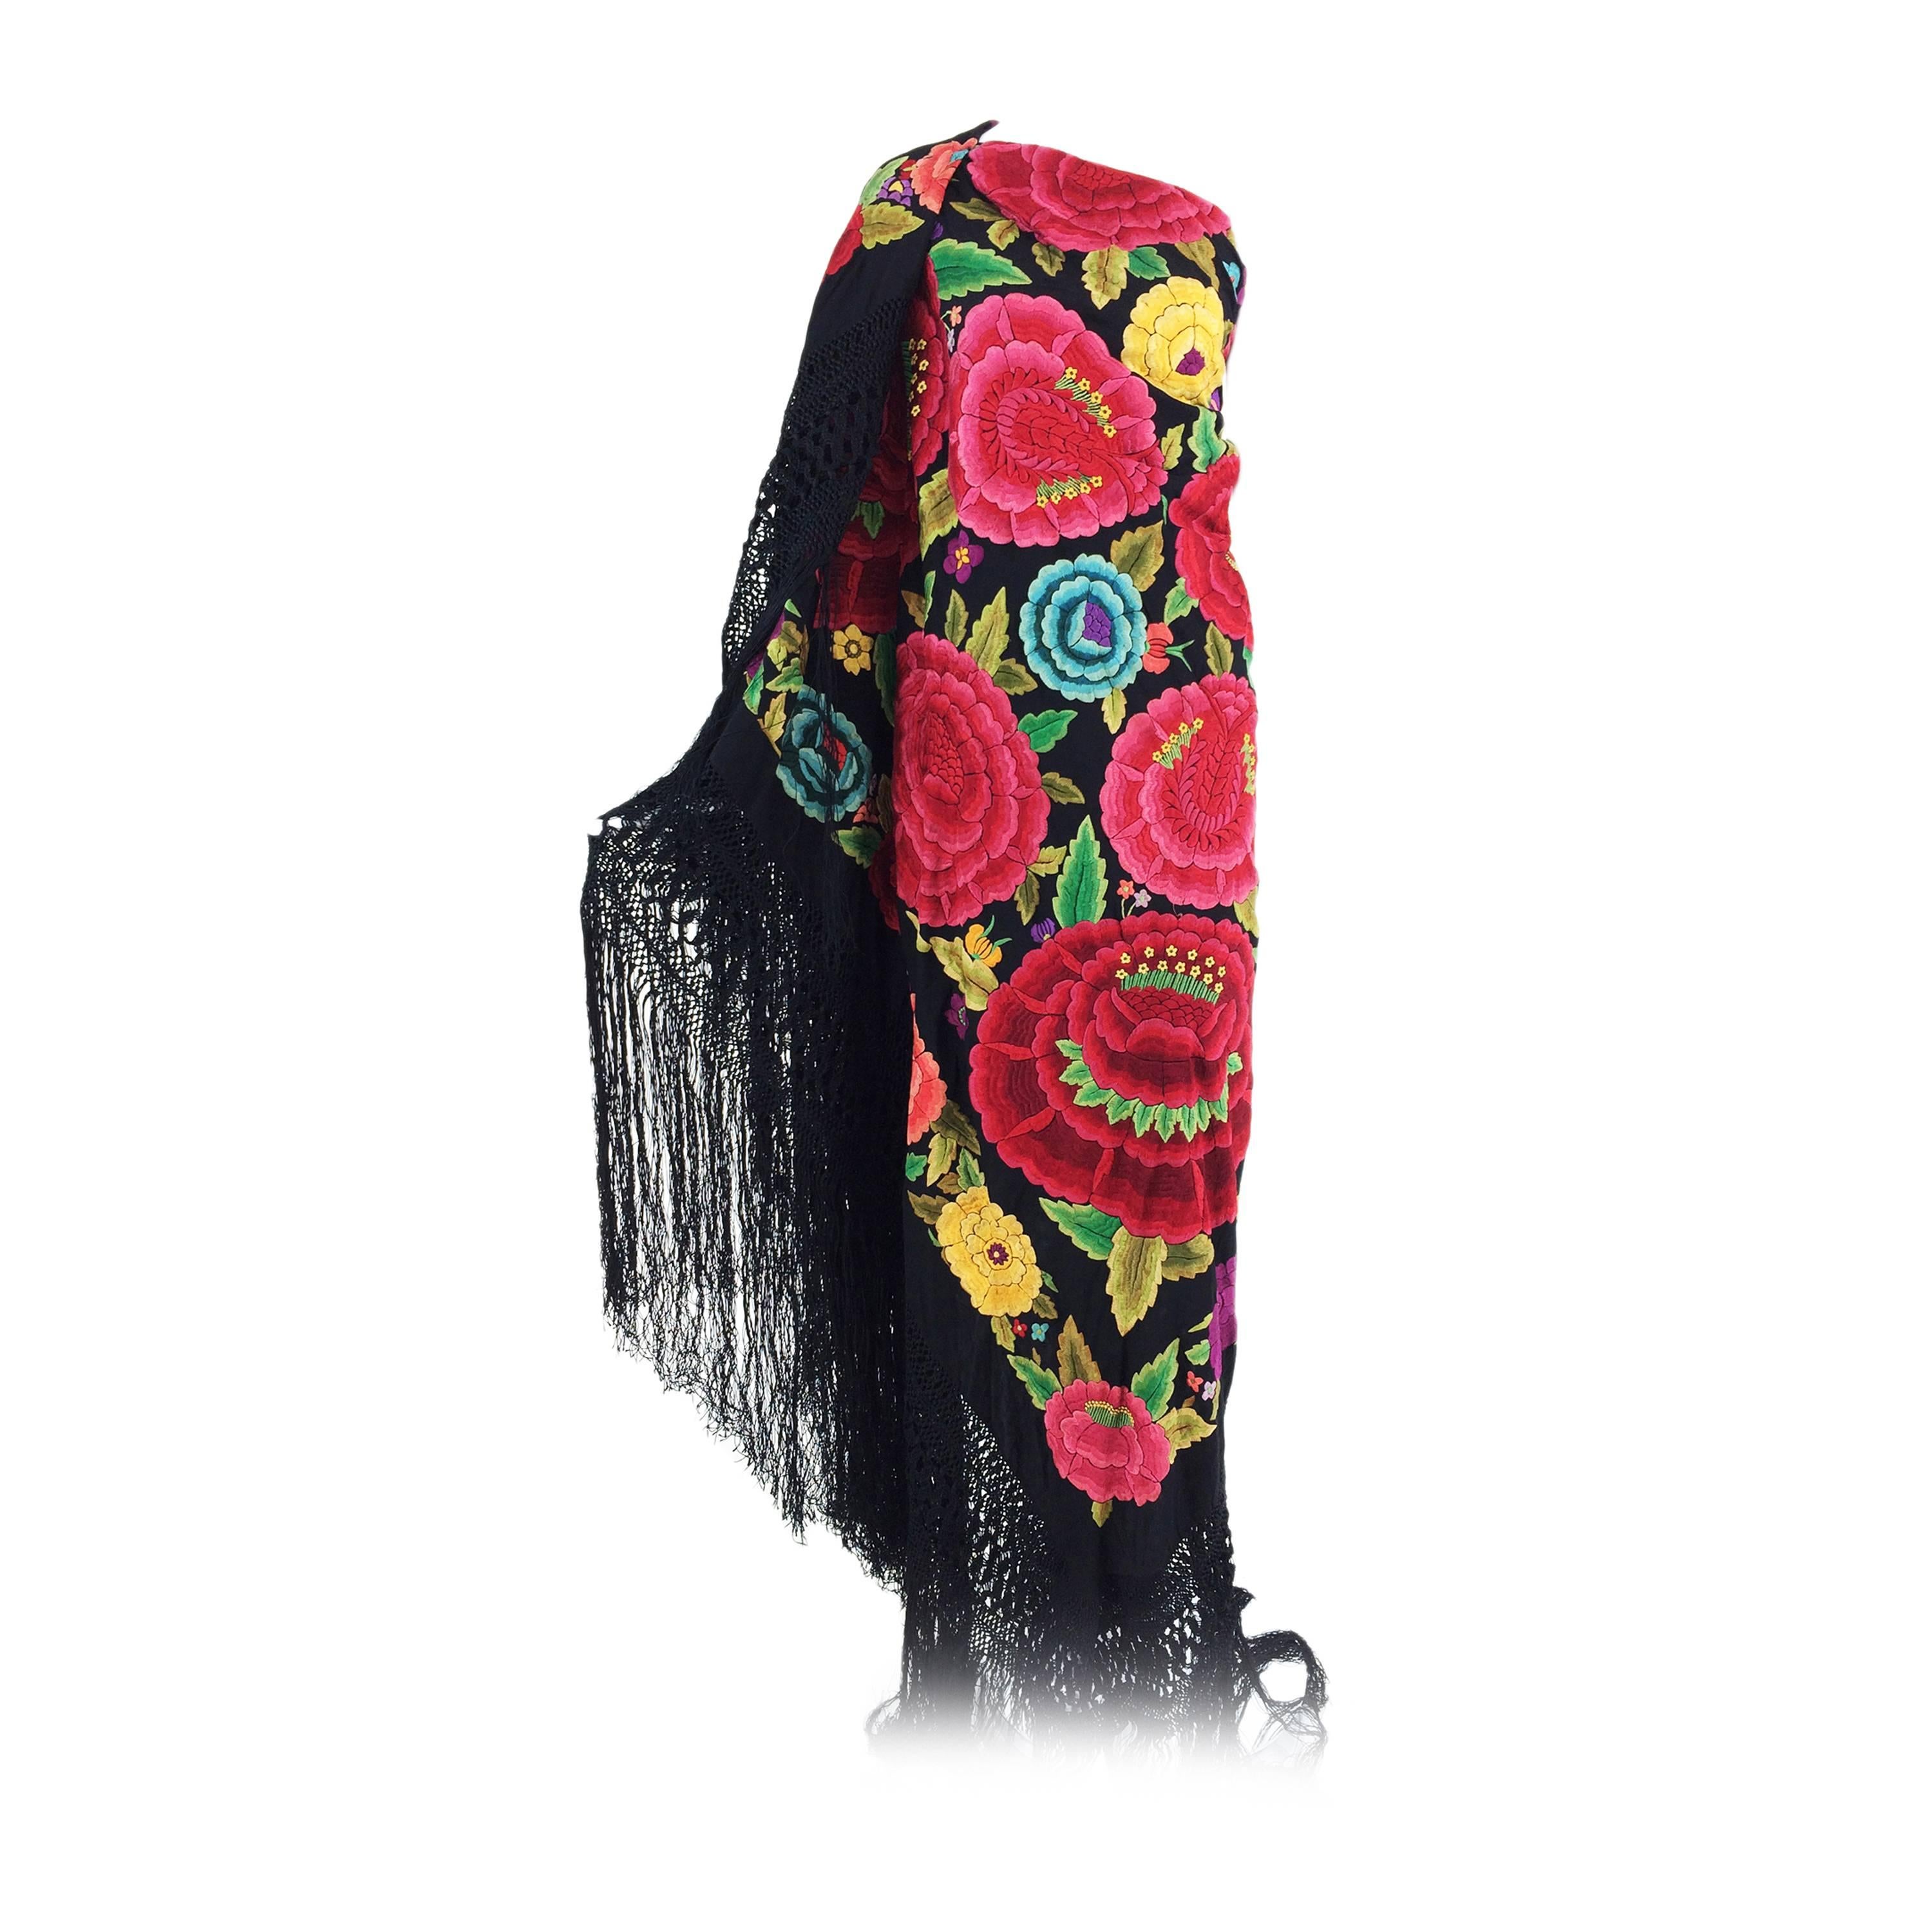 Rare large heavily hand embroidered Spanish manton shawl 1920s